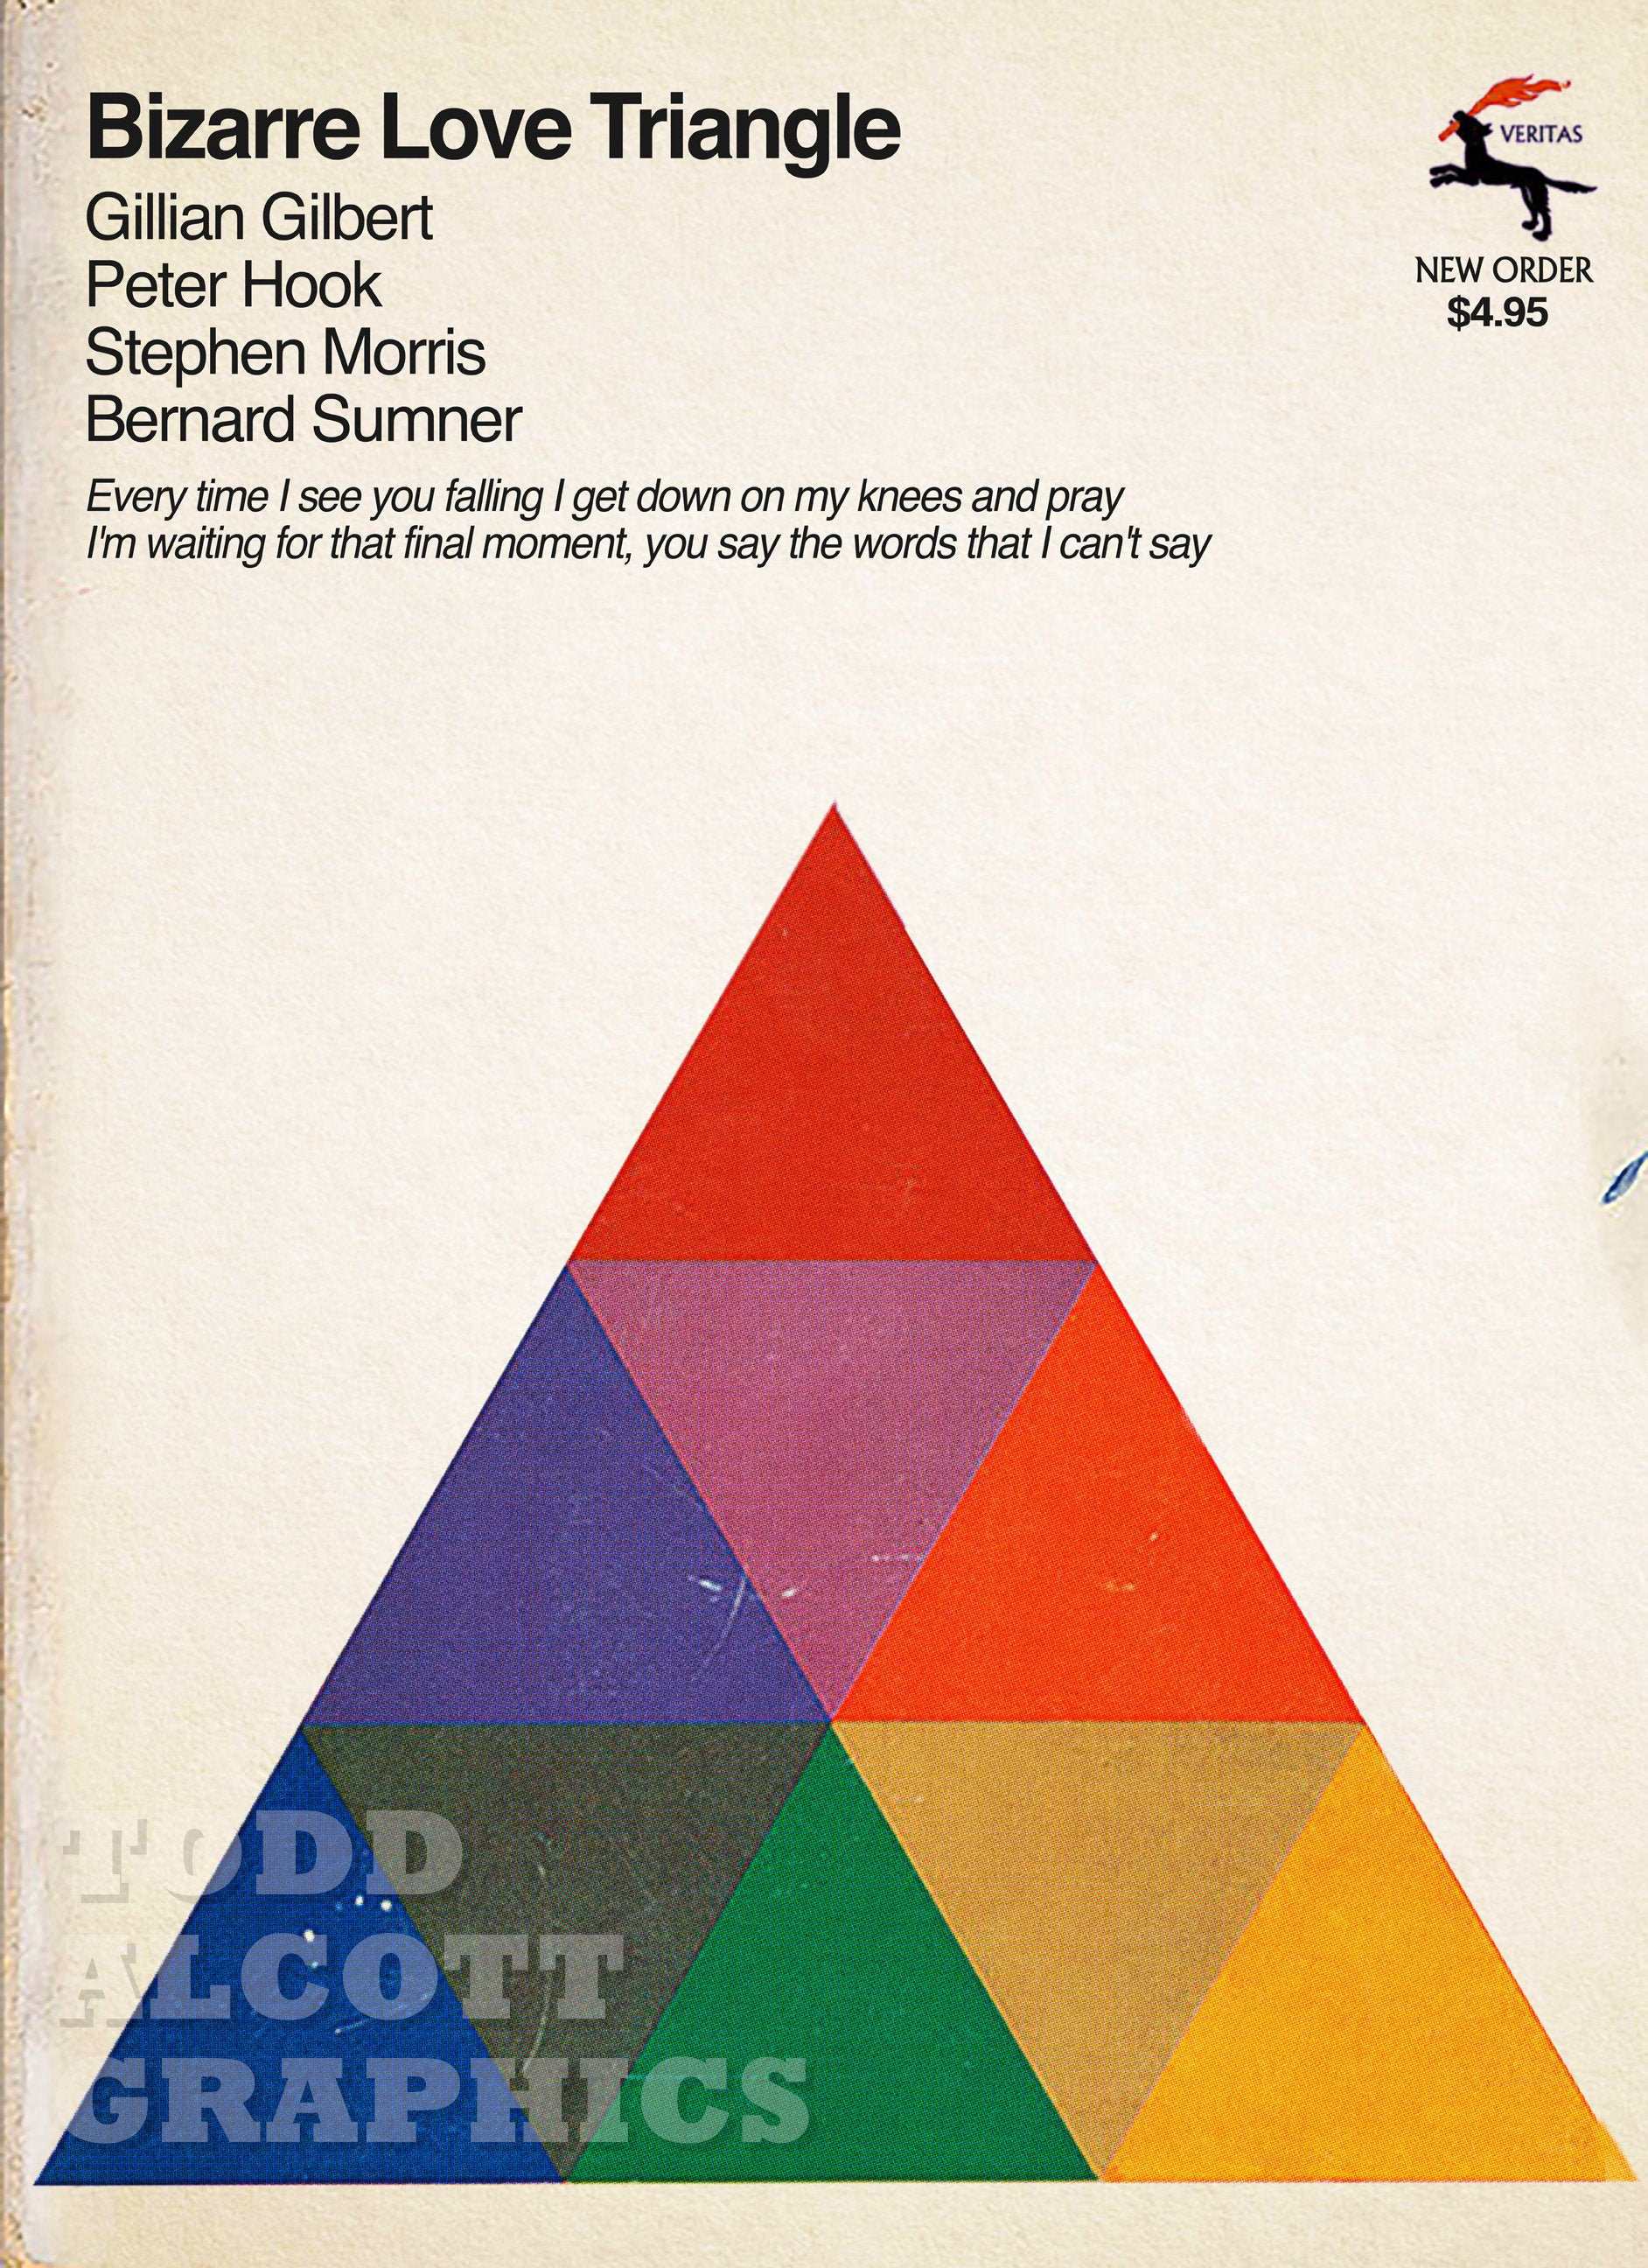 New Order bizarre Love Triangle Math Textbook Mashup Art Print 